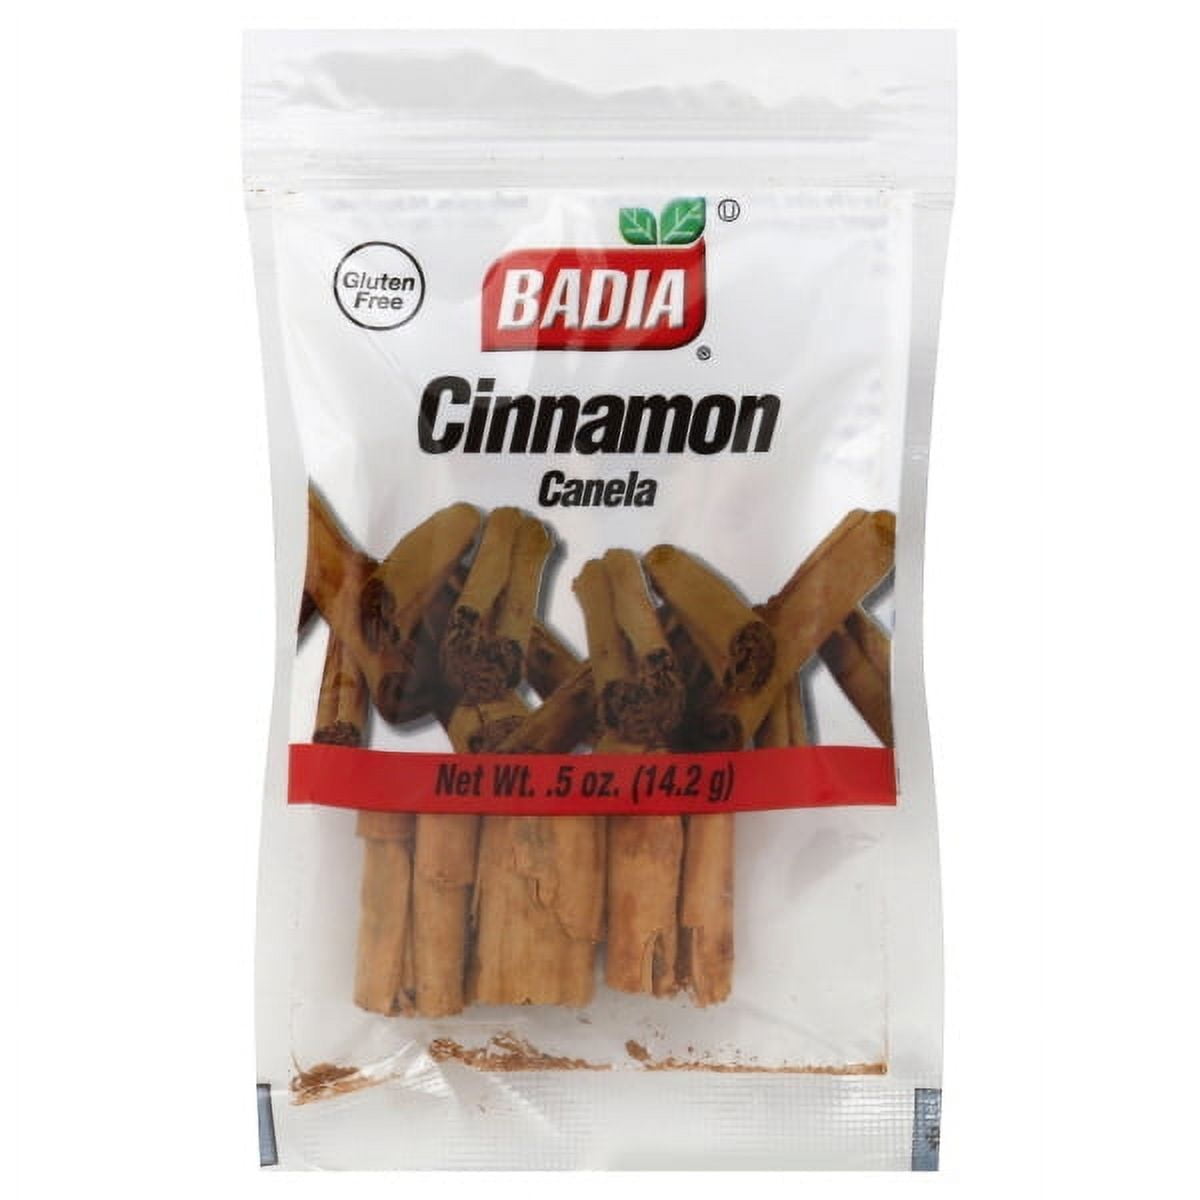 Badia Cinnamon Sticks 0.5 oz Bag